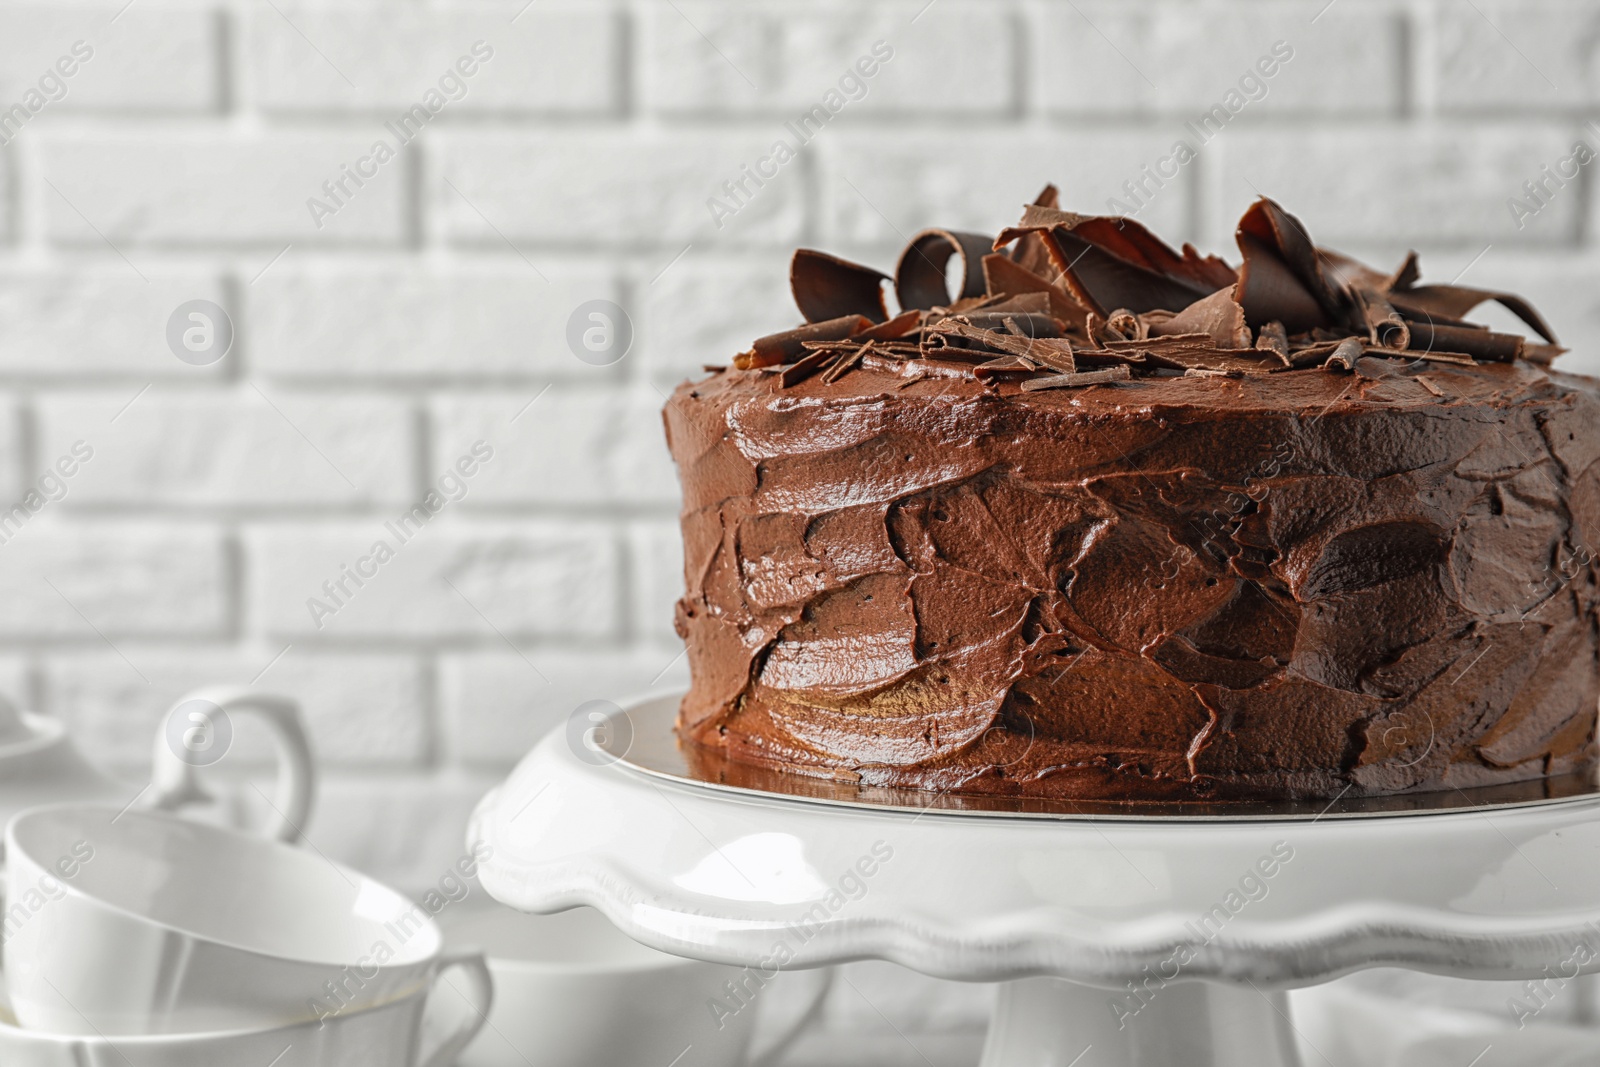 Photo of Stand with tasty homemade chocolate cake near white brick wall